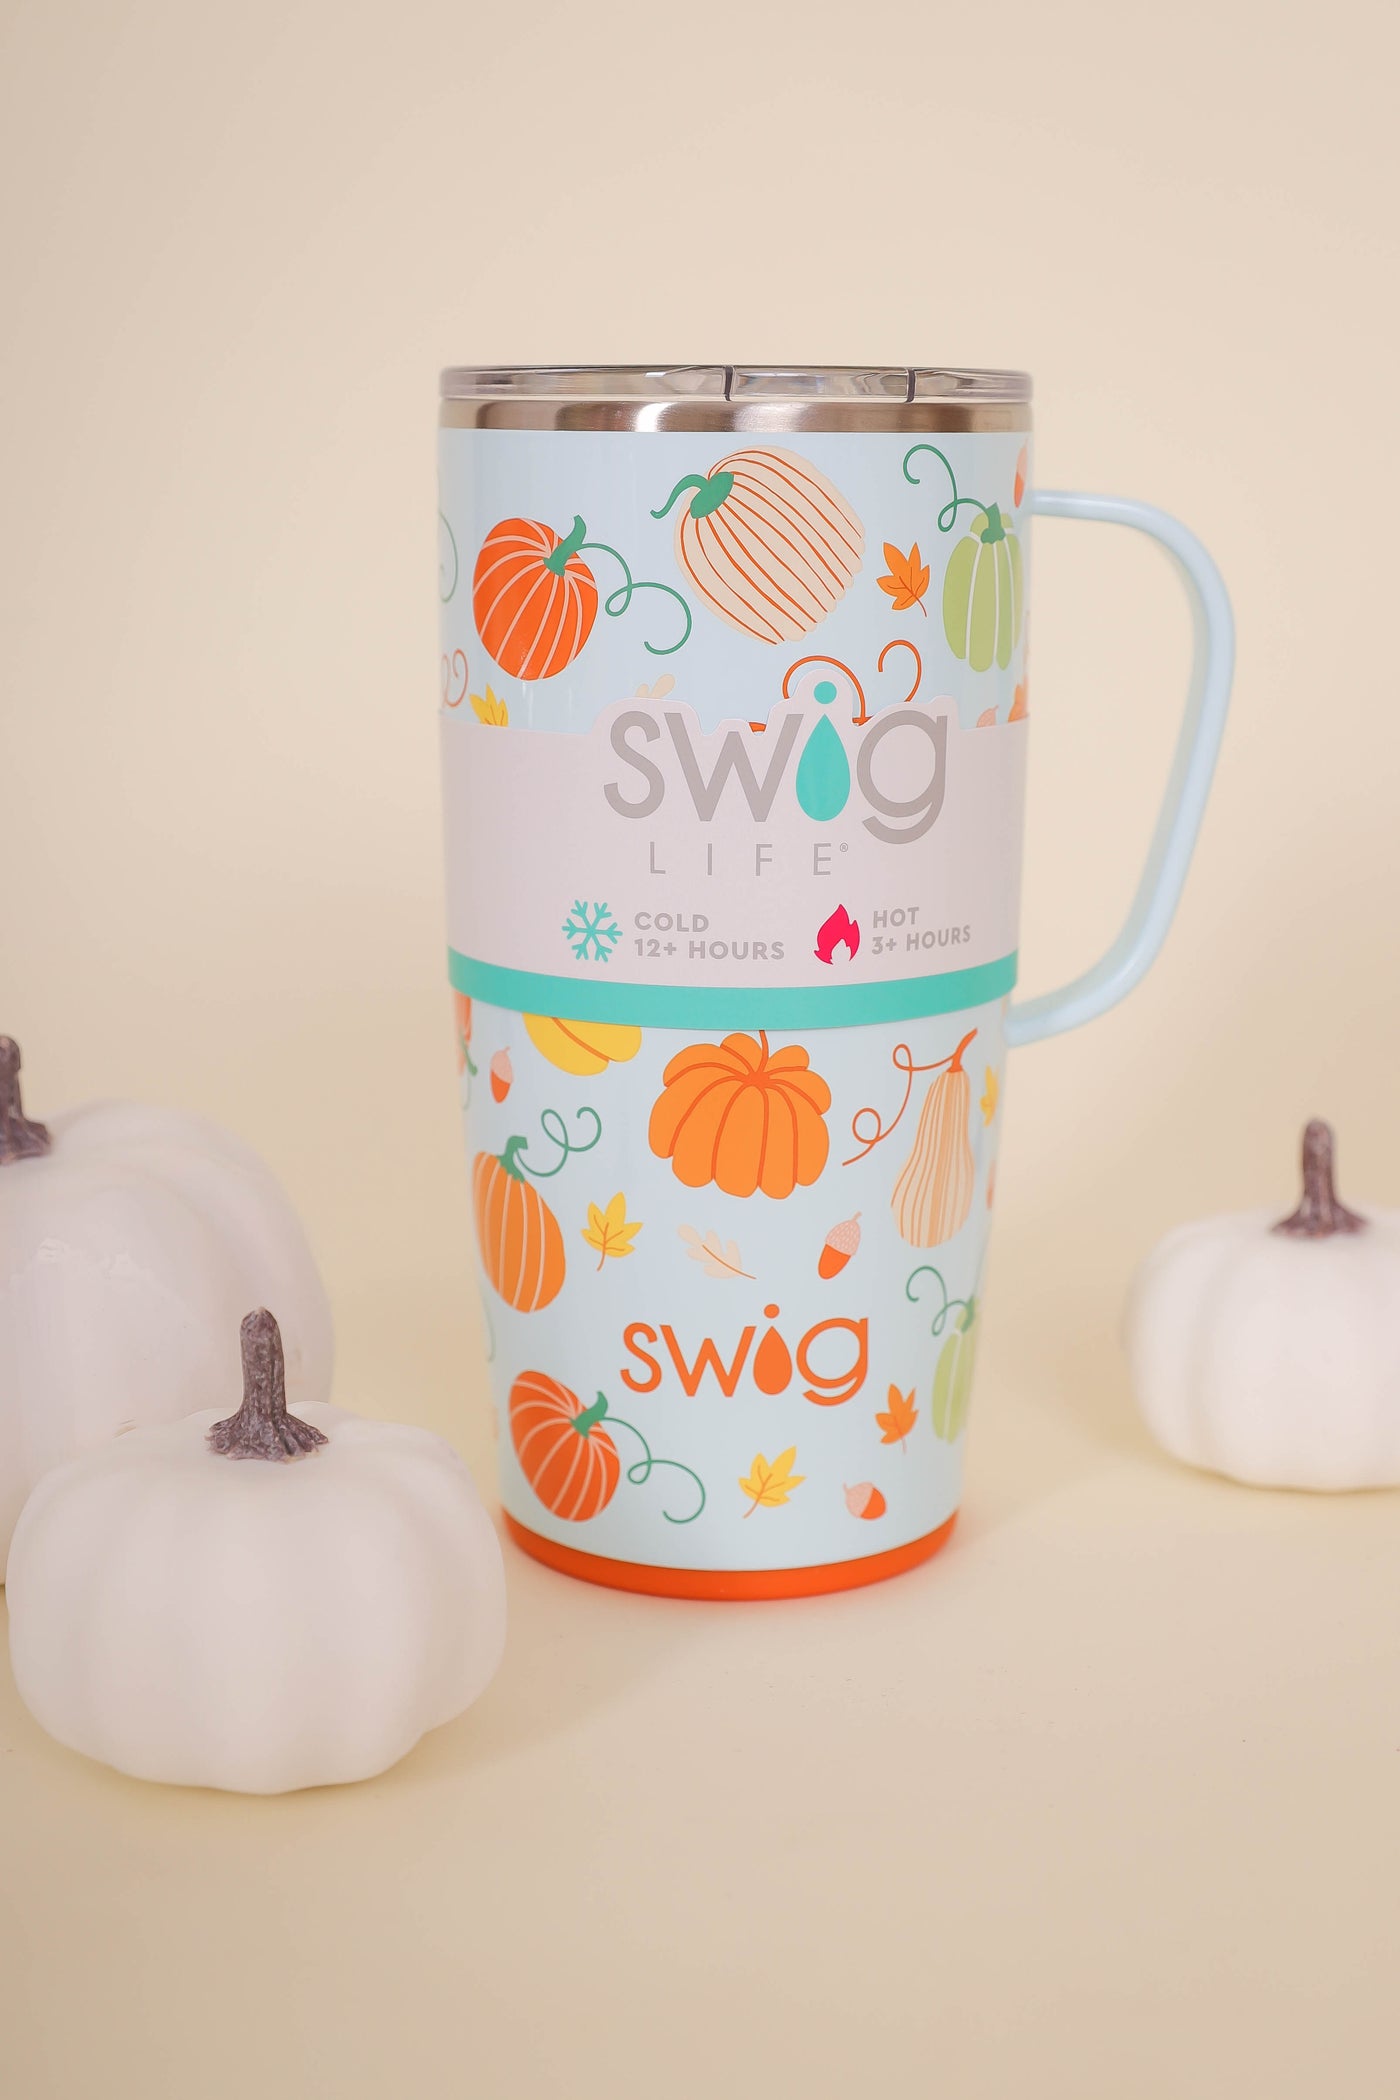 SWIG Pumpkin Spice Travel Mug- Cute Pumpkin Travel Mug- Fall Travel Mug